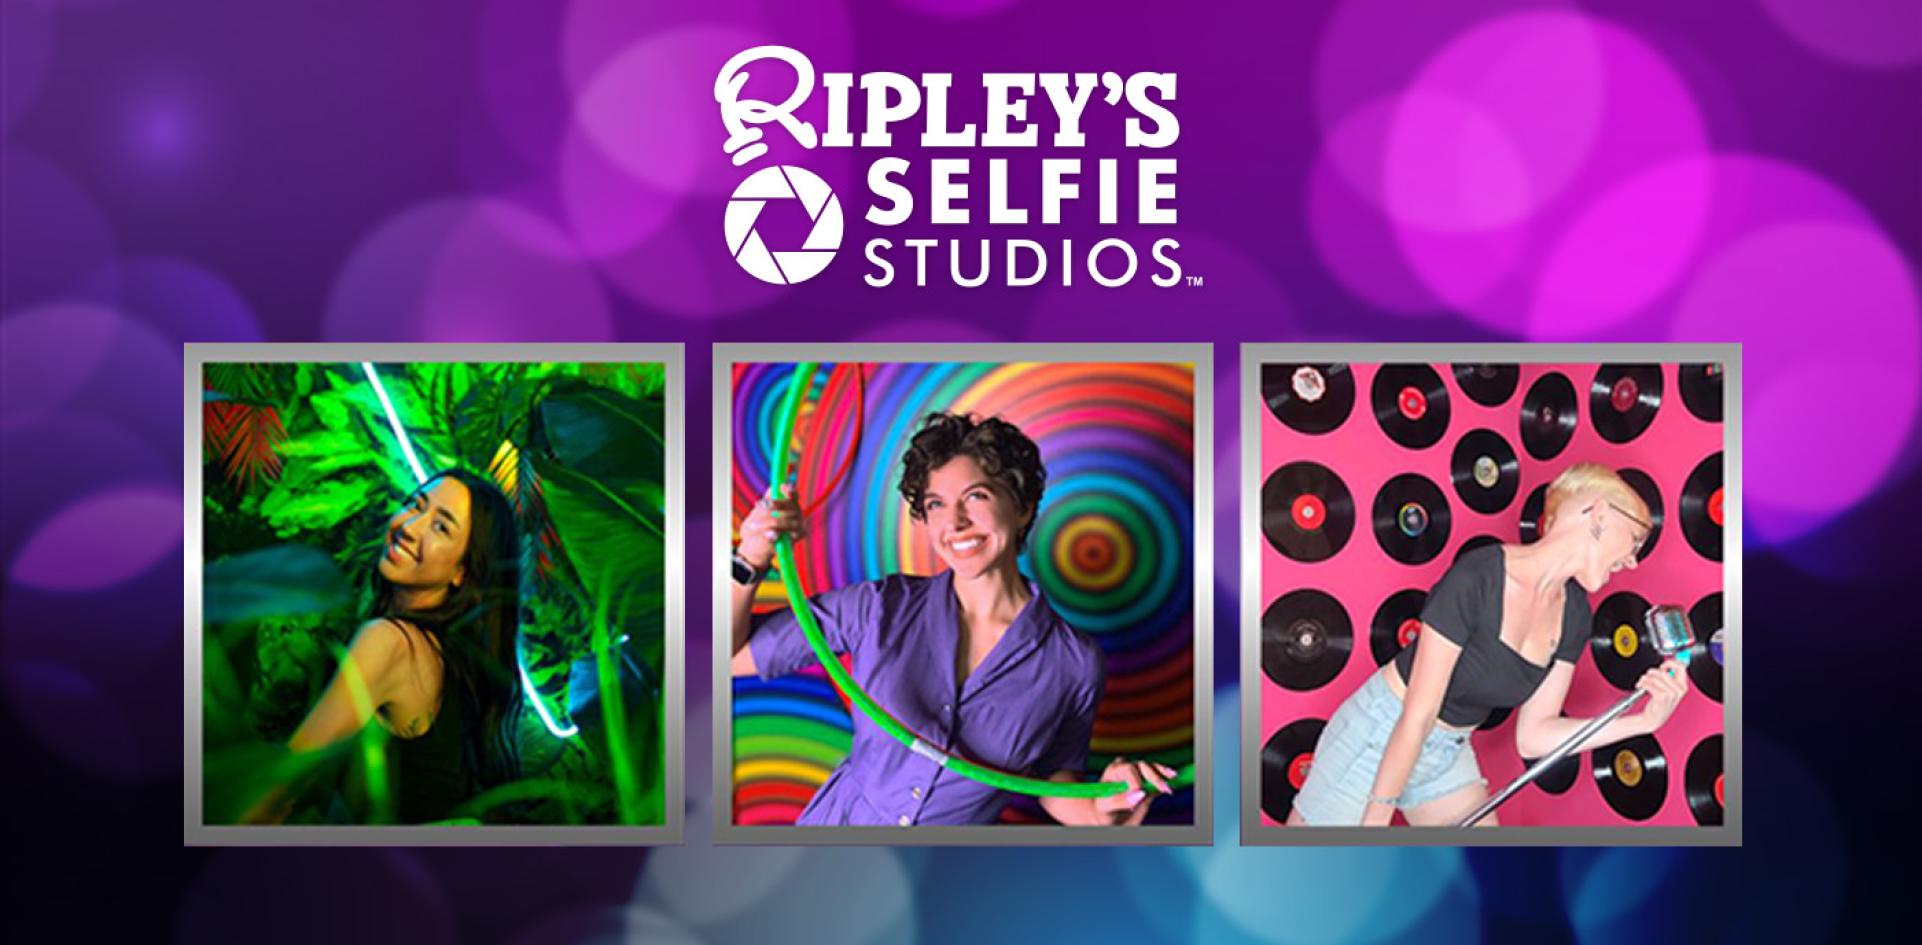 Ripleys Selfie Studio